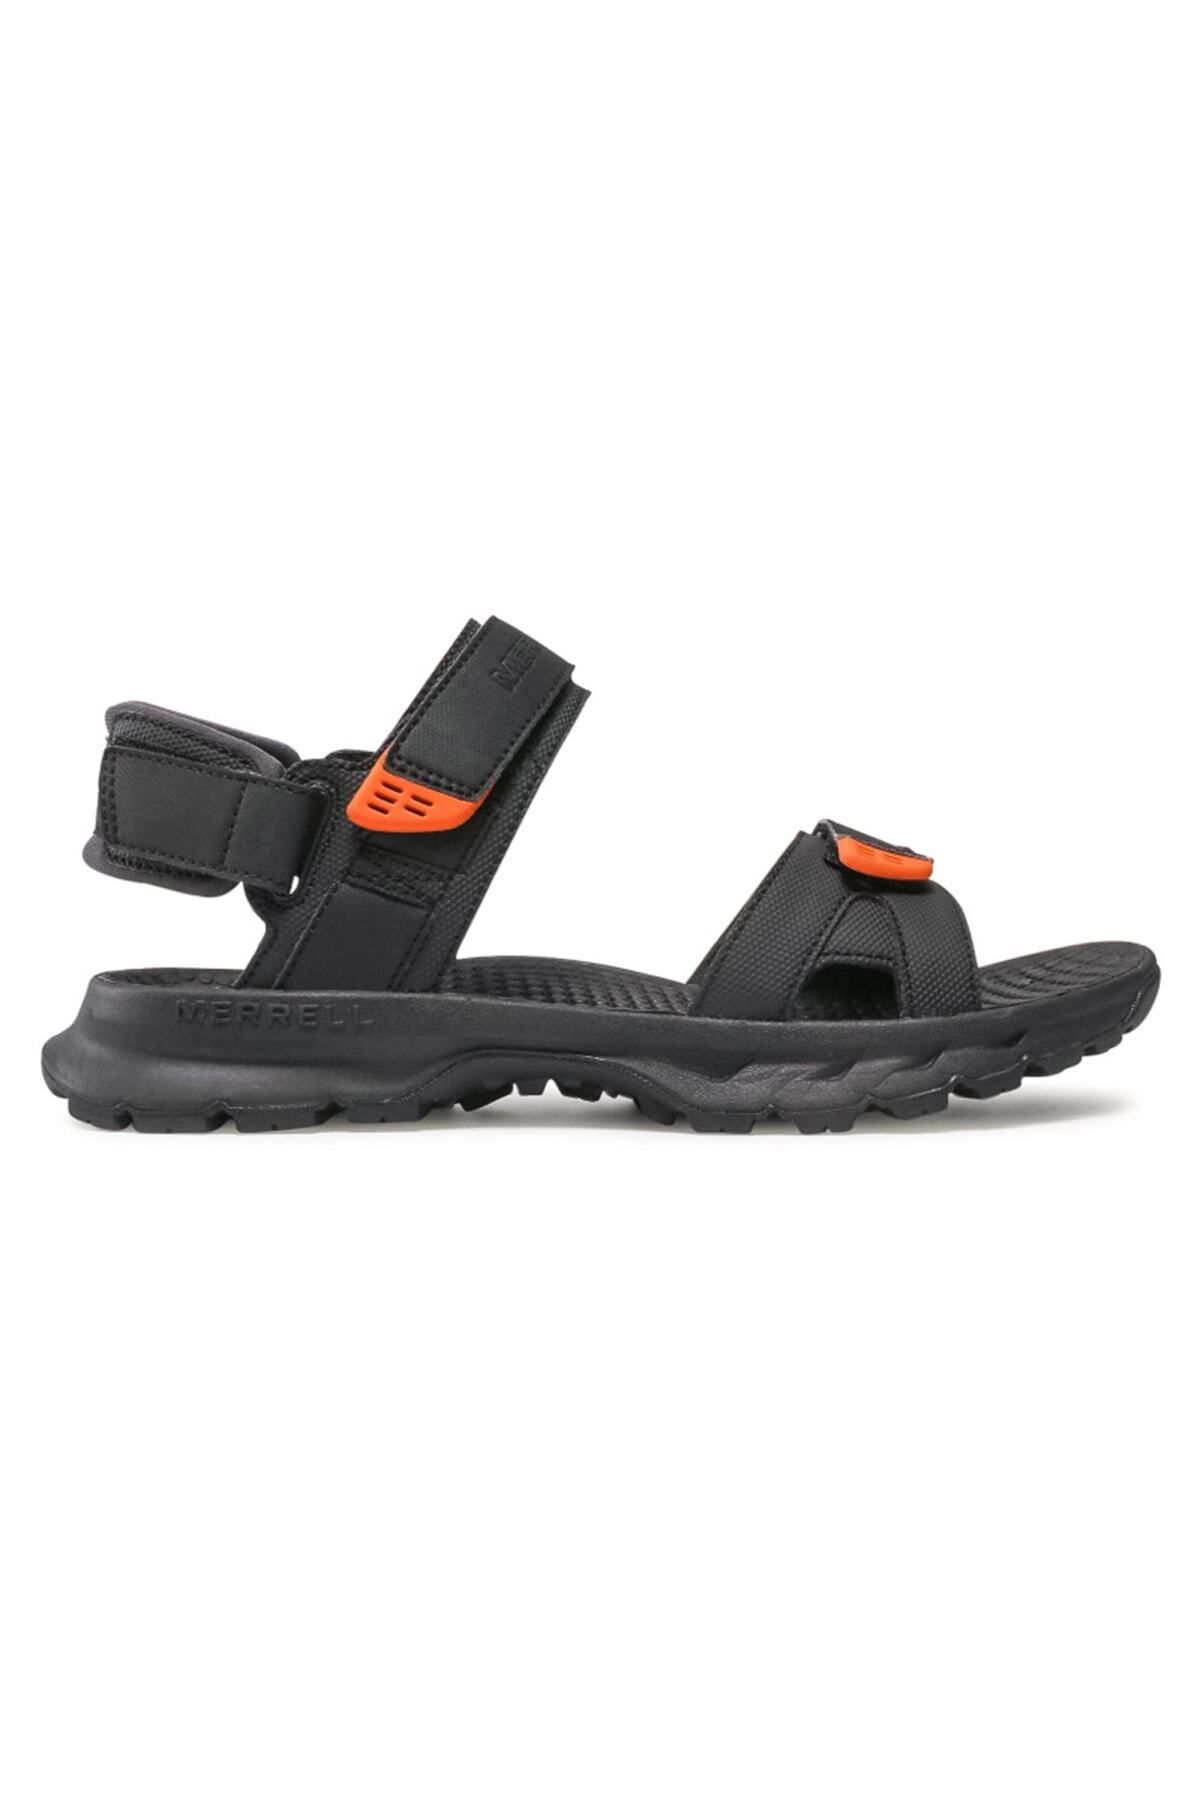 Merrell Cedrus Convert 3 Erkek Çok Renkli Günlük Stil Sandalet J036173